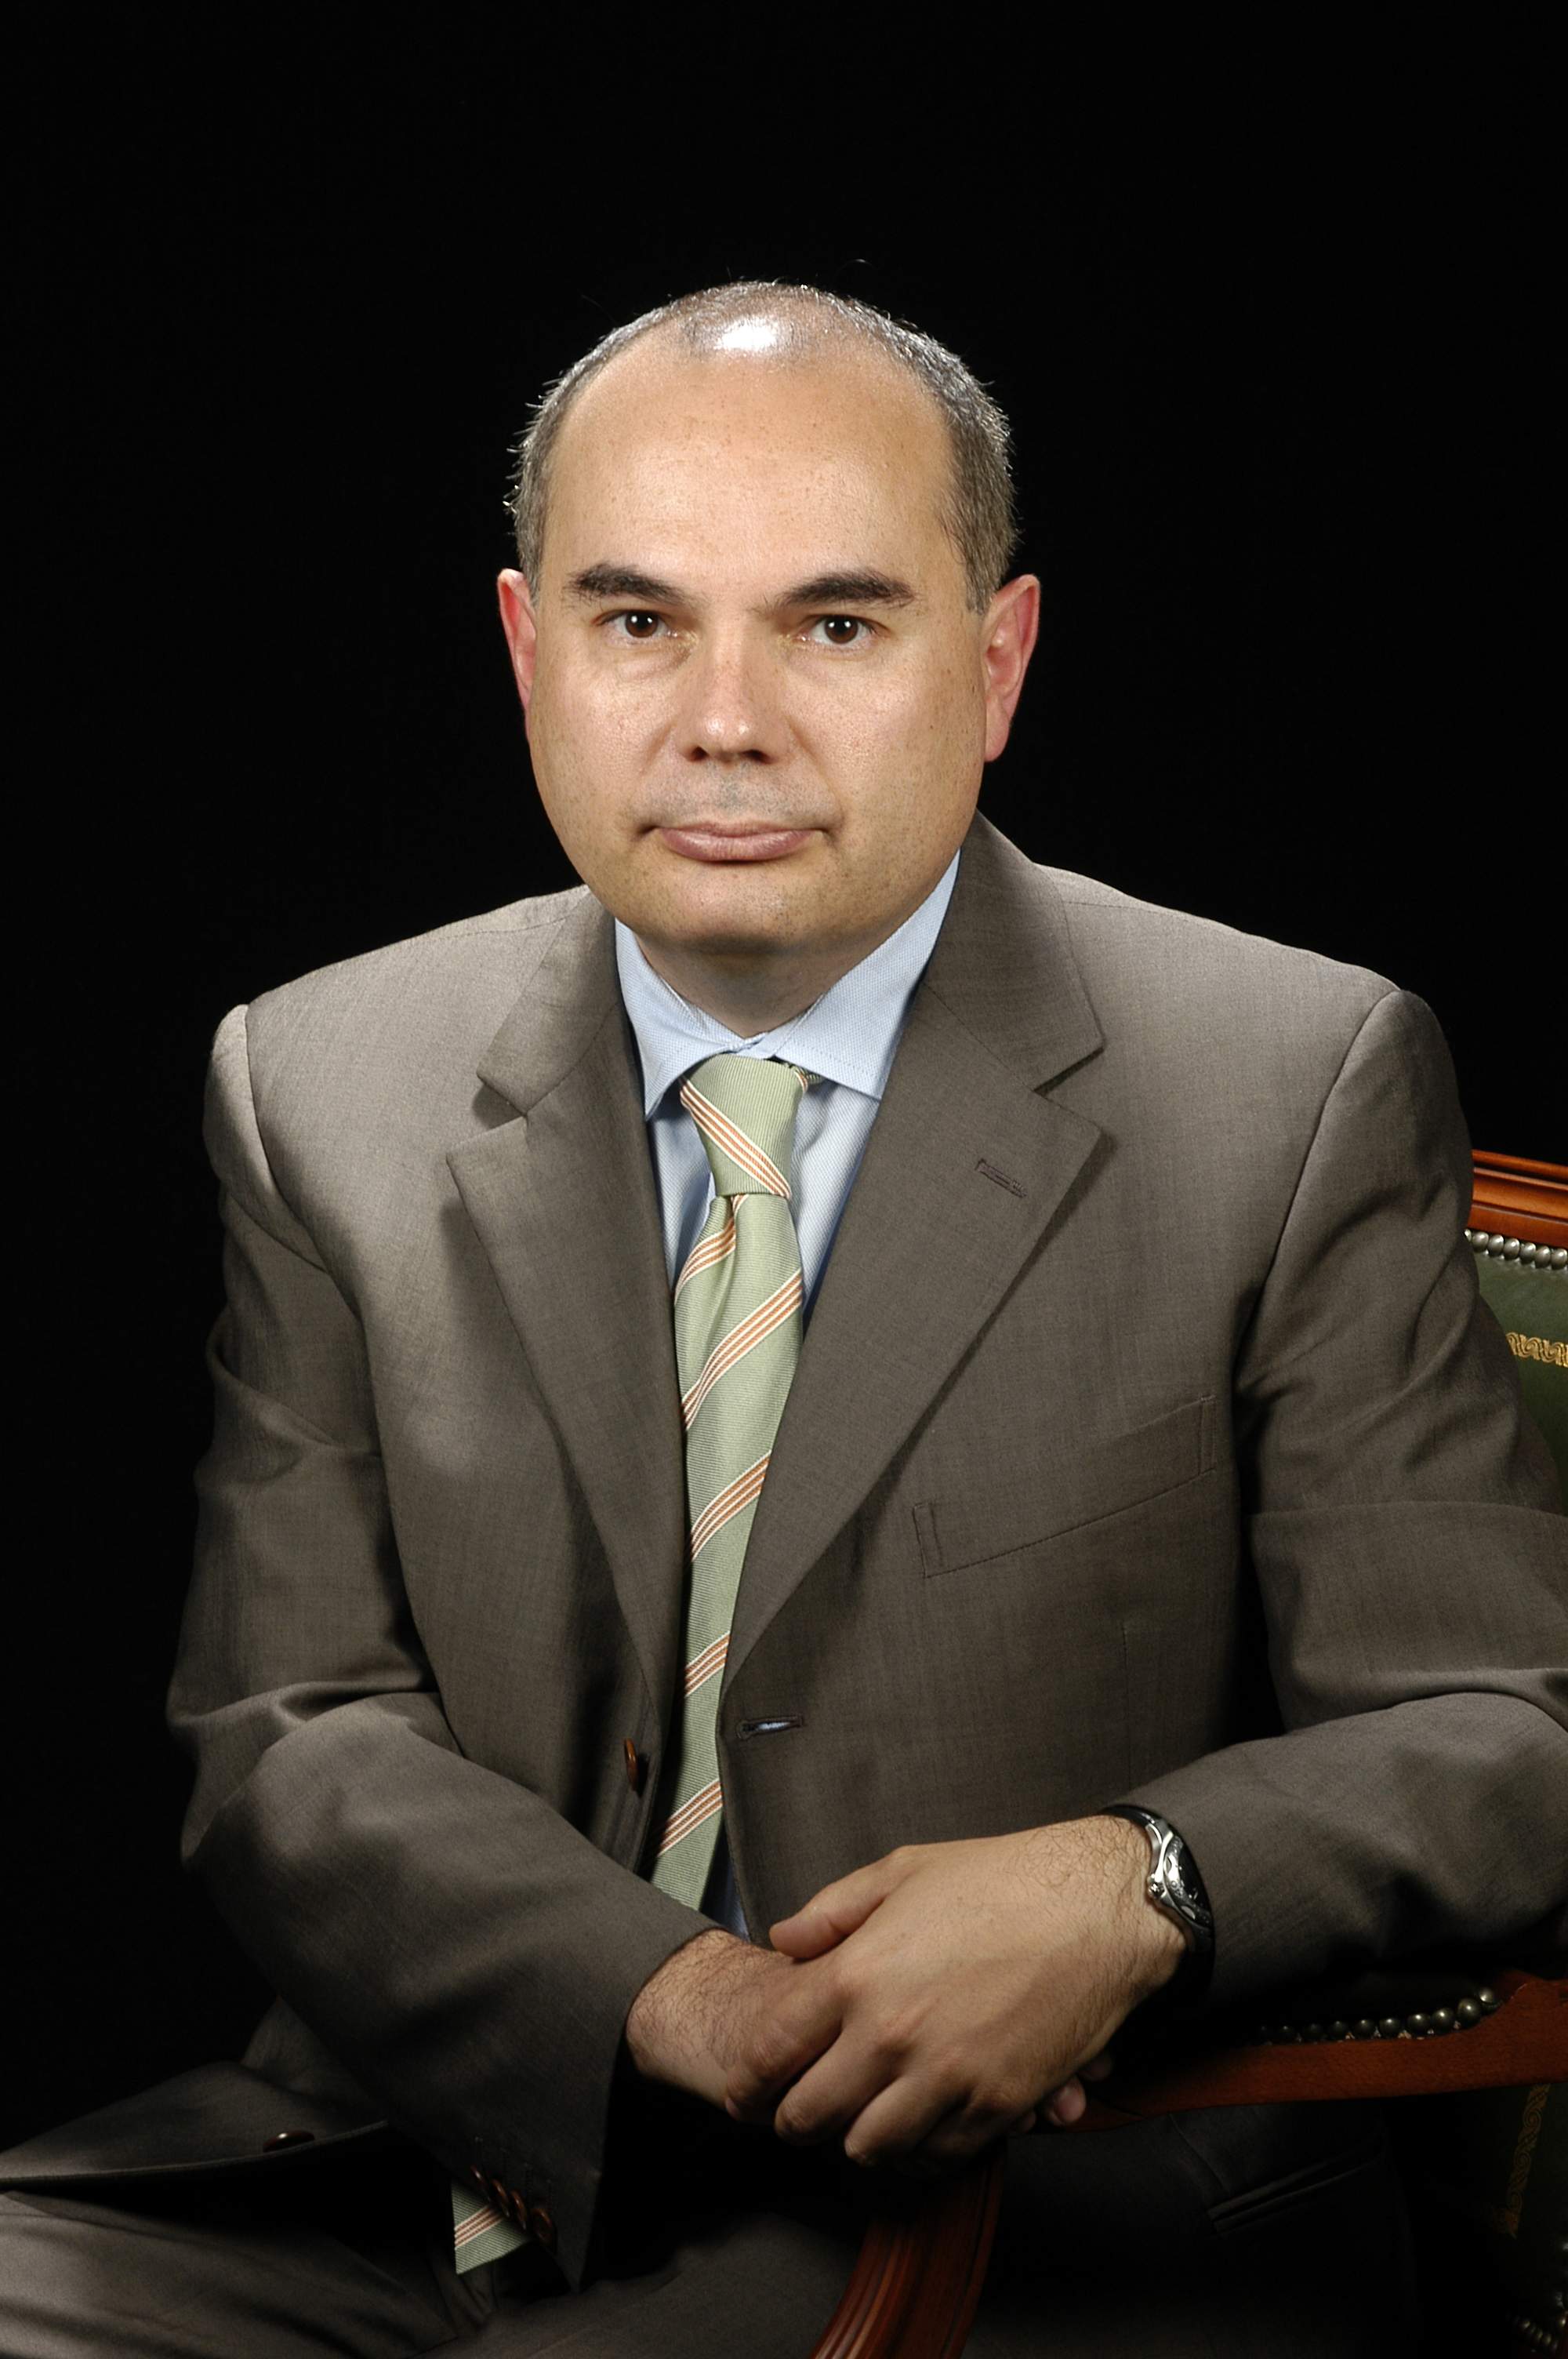 Dr. Josep Tabernero Caturla